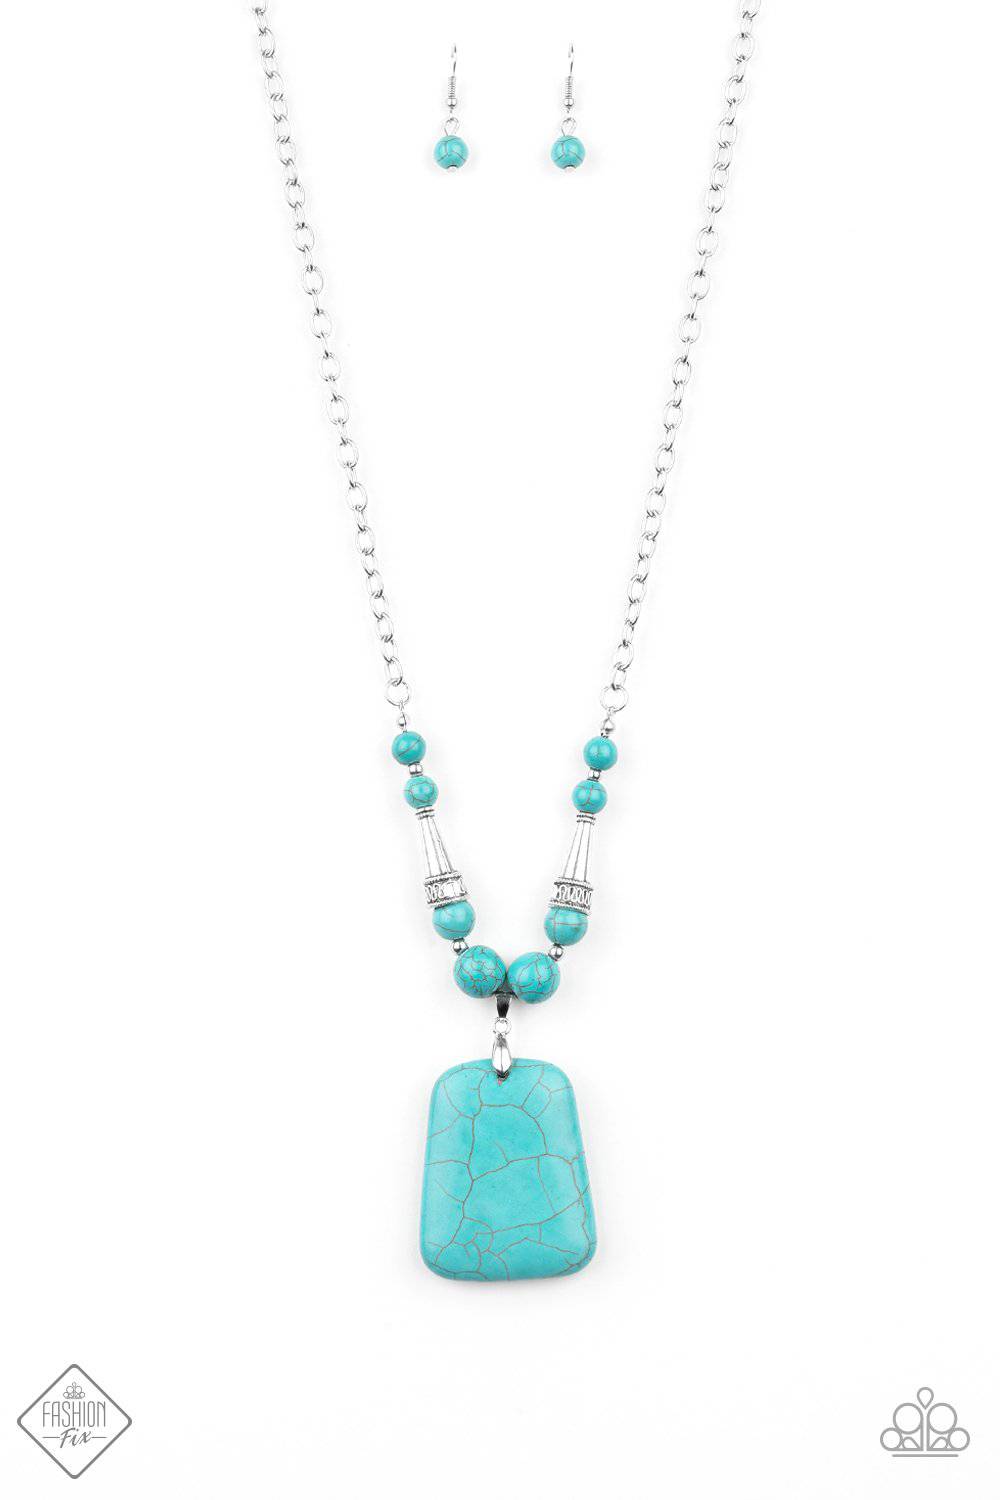 Sandstone Oasis - Blue Turquoise Stone Necklace - Paparazzi Accessories - GlaMarous Titi Jewels